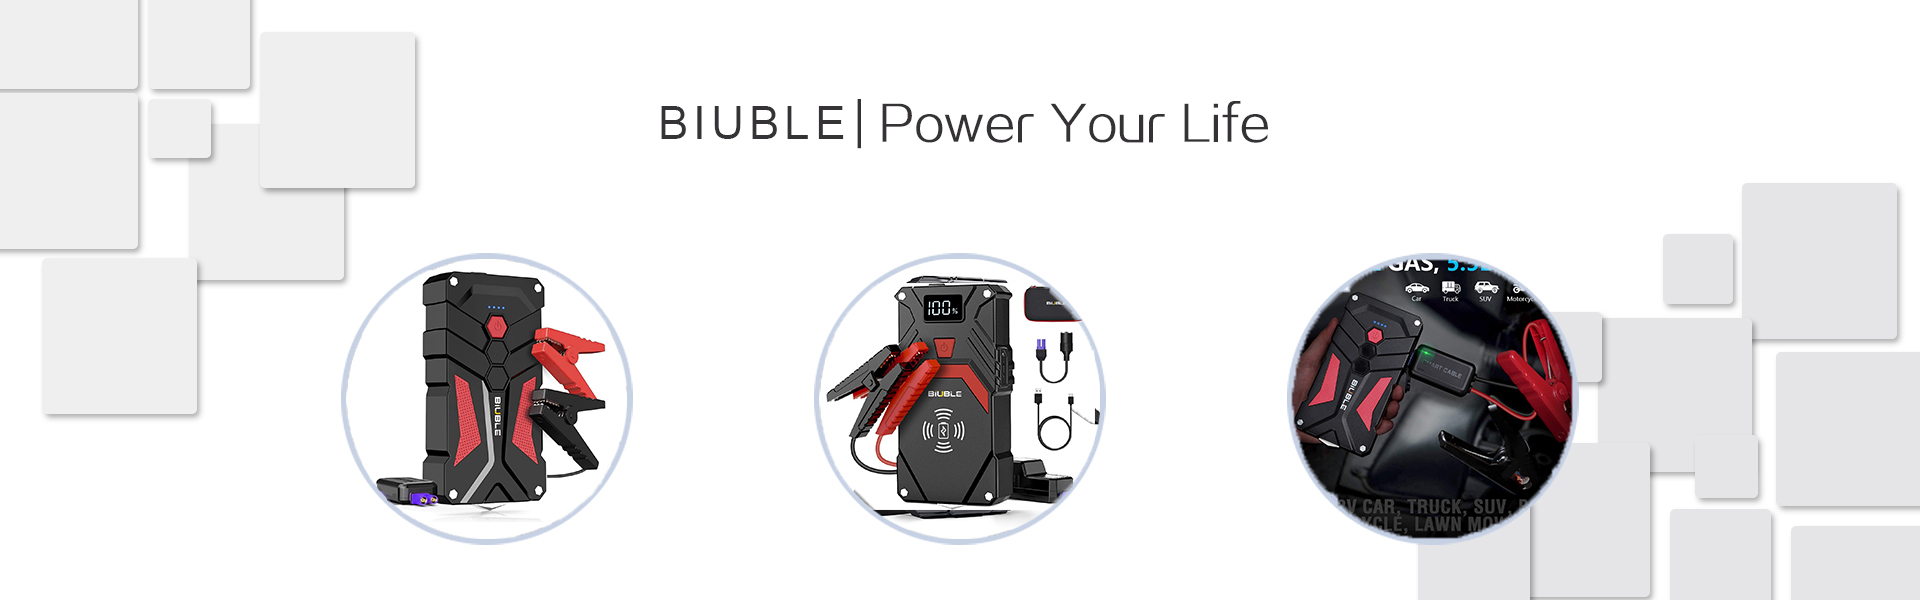 BIUBLE  Power Your Life